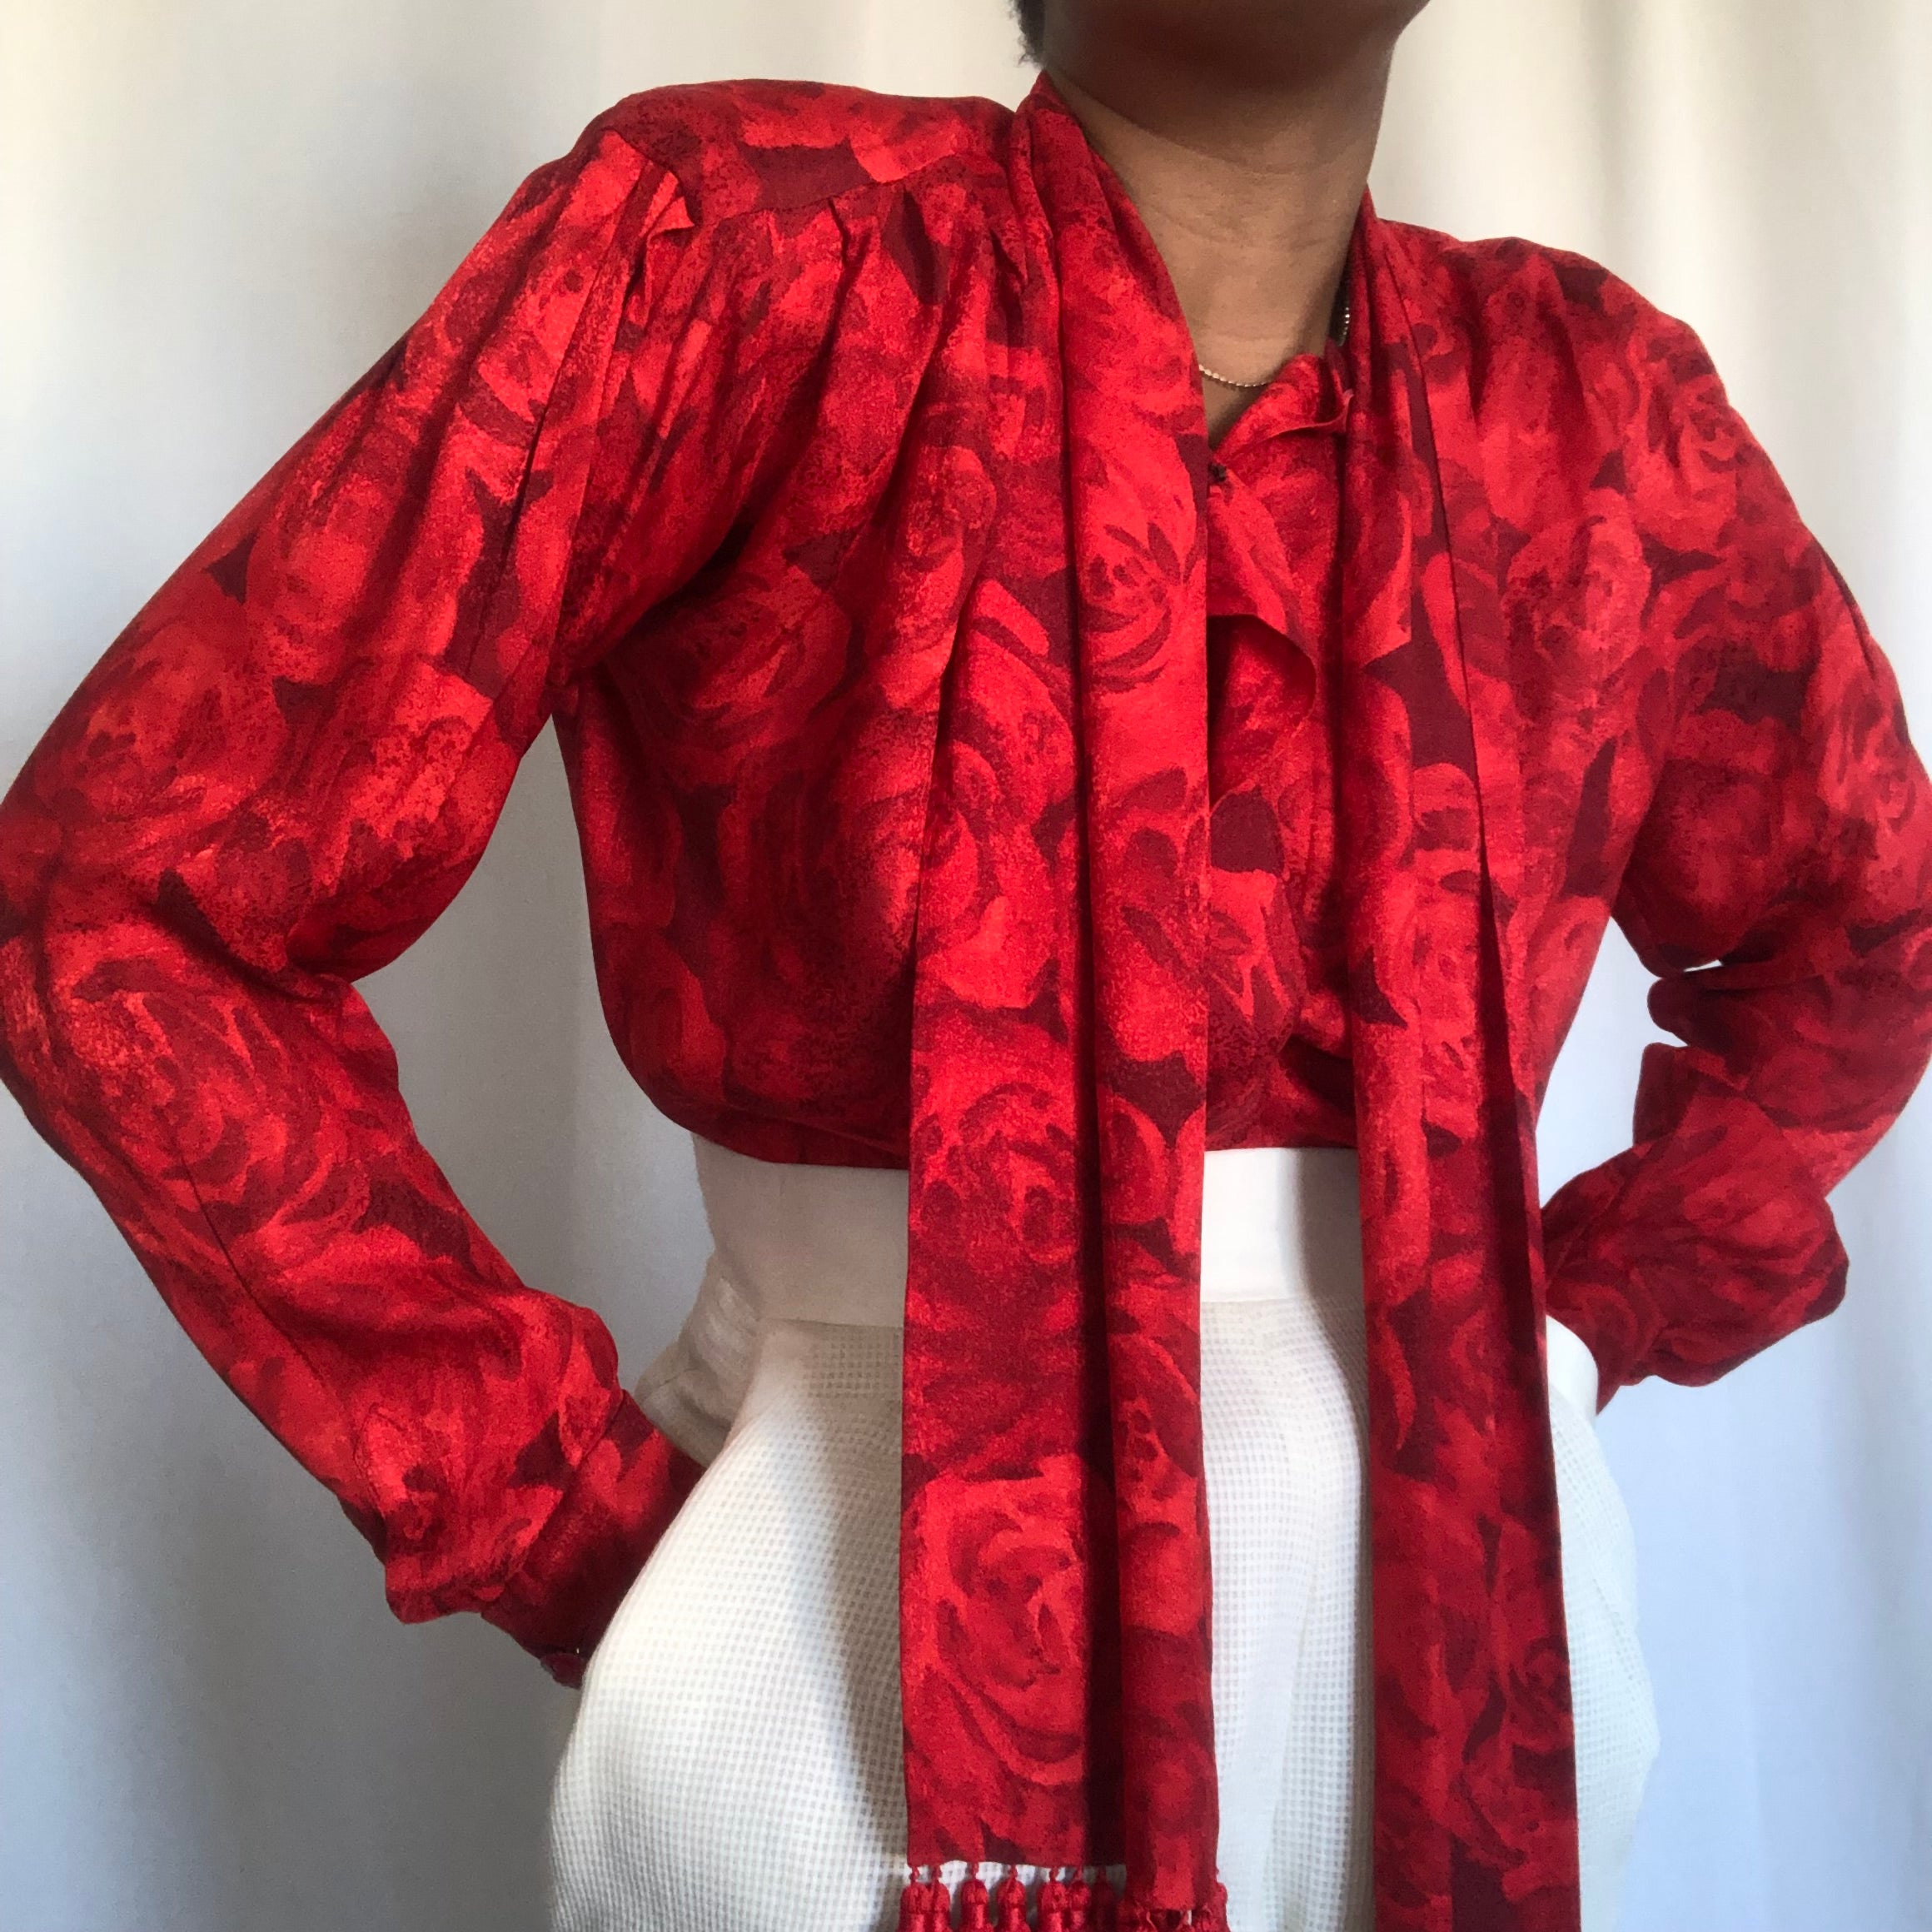 Quiyute Vintage Red Rose glamorous shirt model posing front